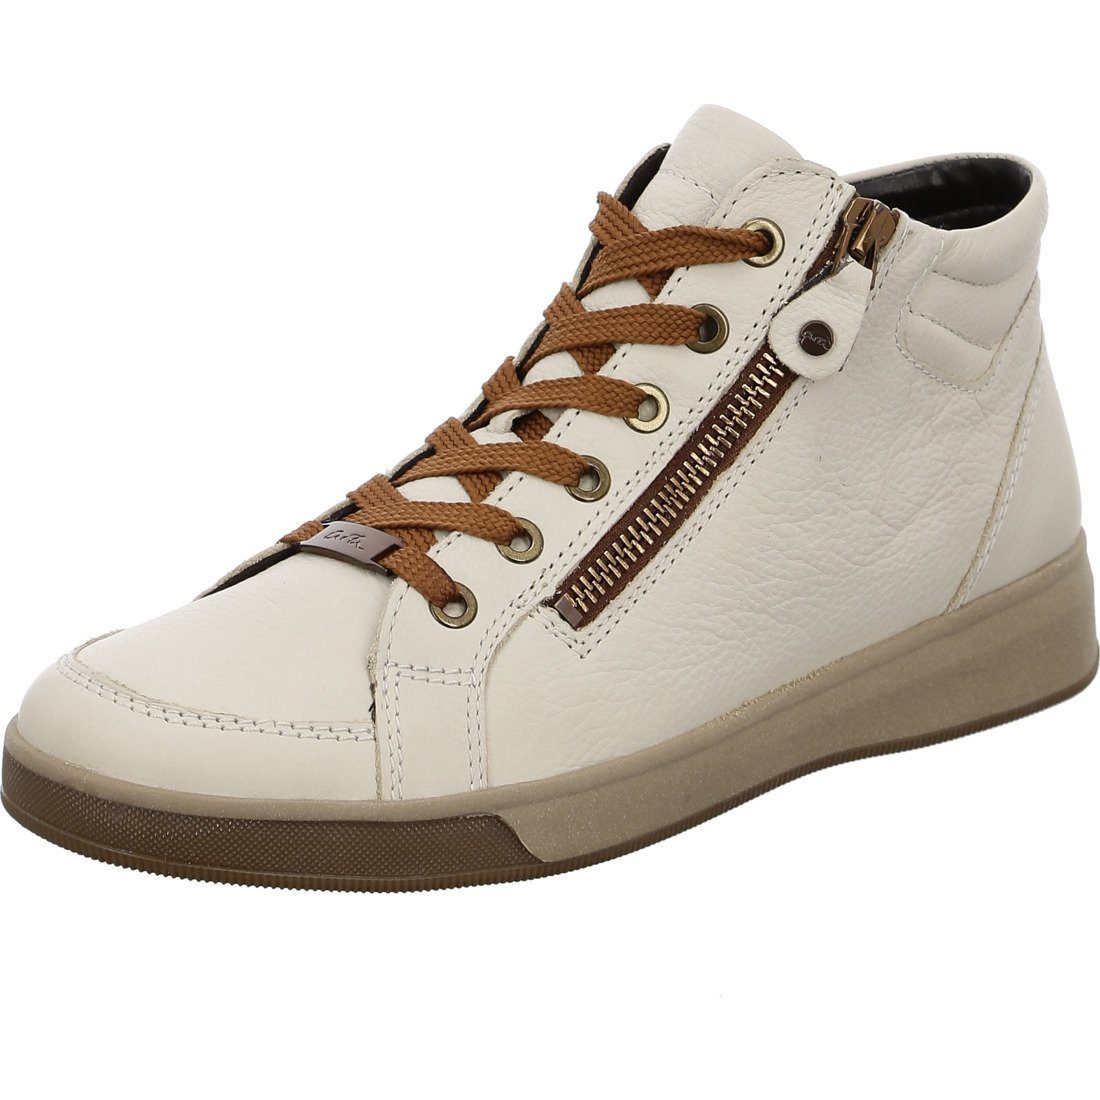 Ara Ara 049143 offwhite Schuhe, Sneaker Nubuk Damen - Sneaker Rom